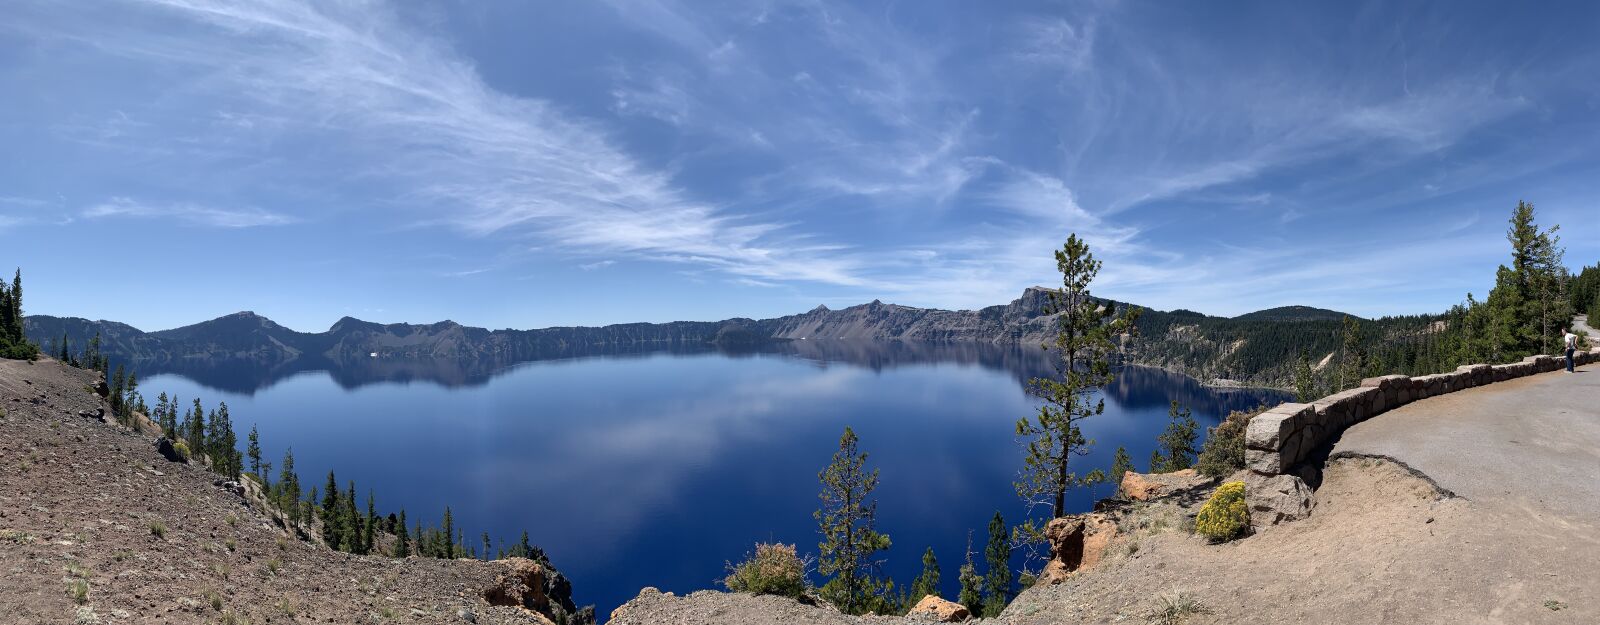 Apple iPhone XS + iPhone XS back camera 4.25mm f/1.8 sample photo. Lake, crater lake, oregon photography